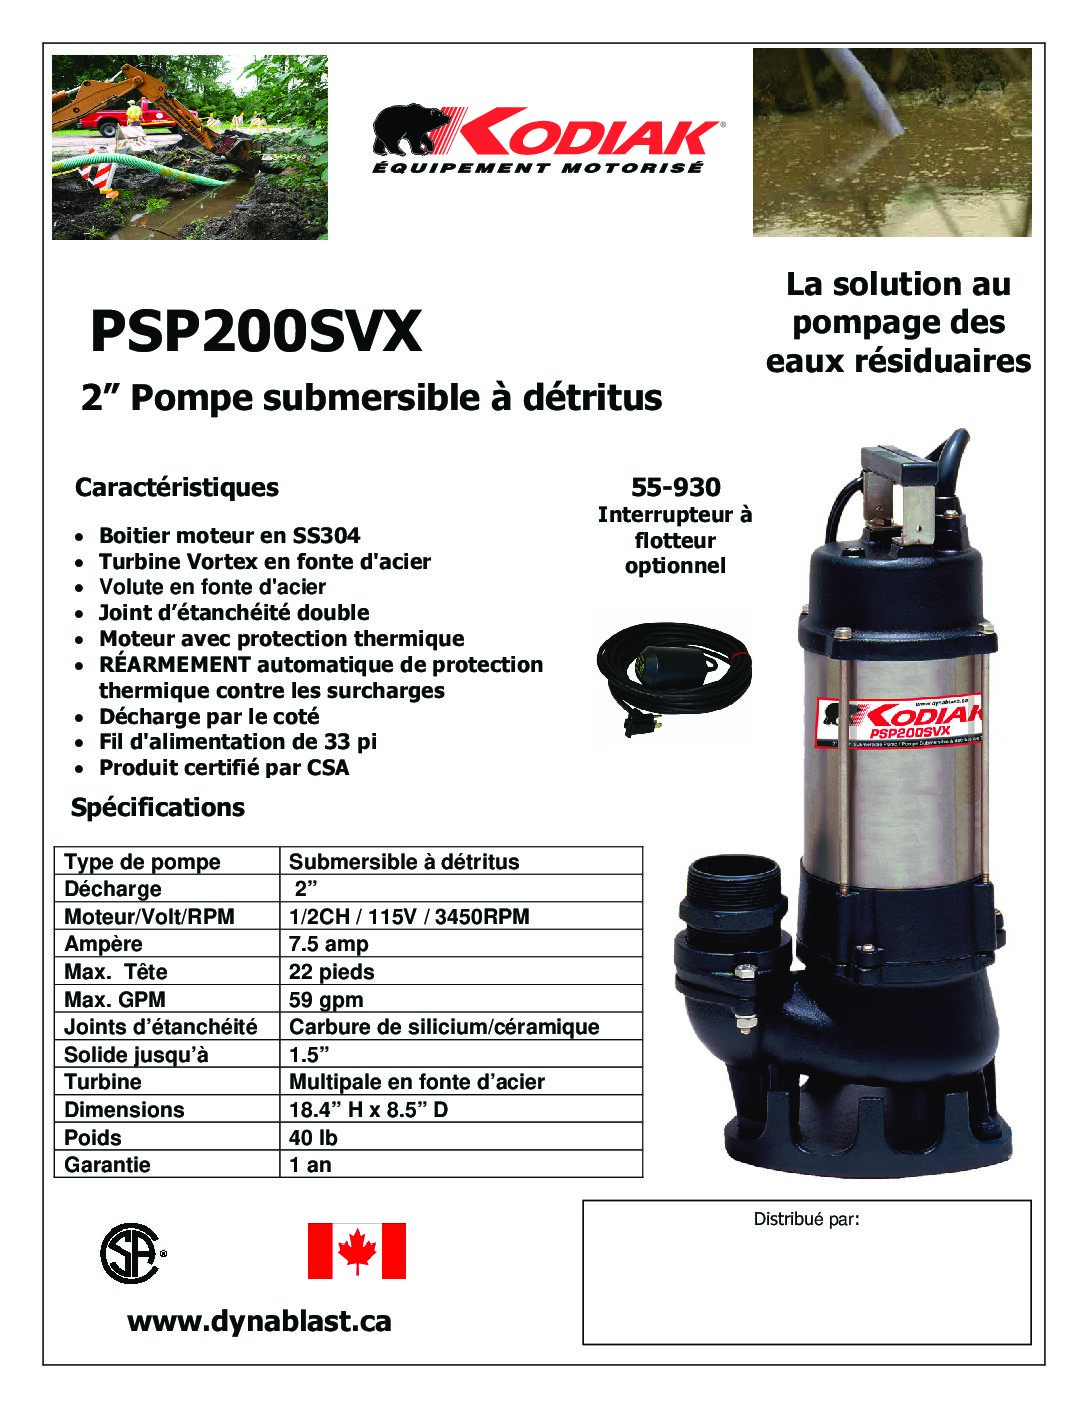 PSP200SVX Lit French